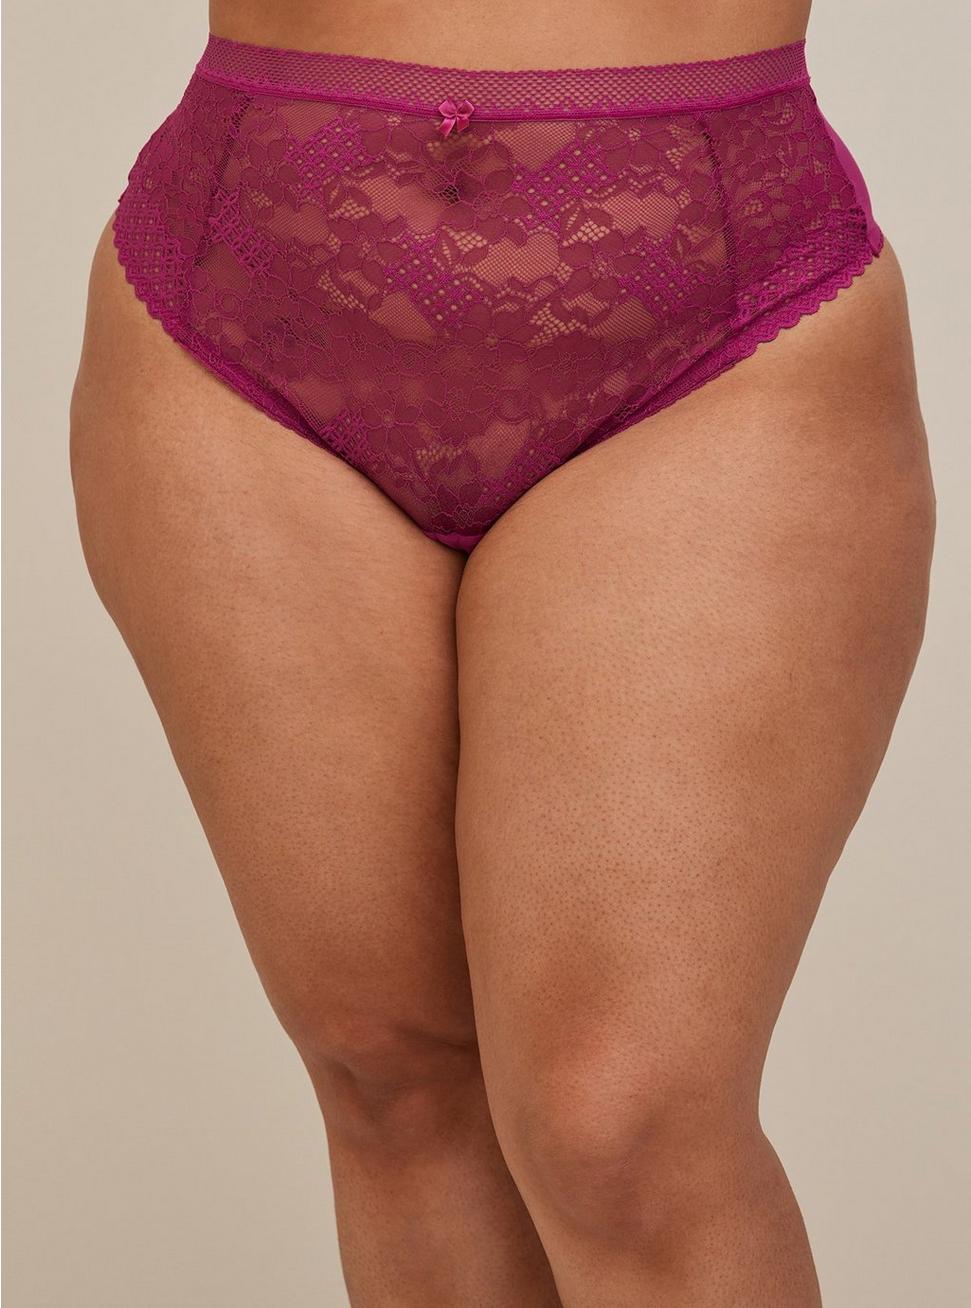 Plus Size - High Waist Thong Cutout Panty - Lace Fuchsia - Torrid